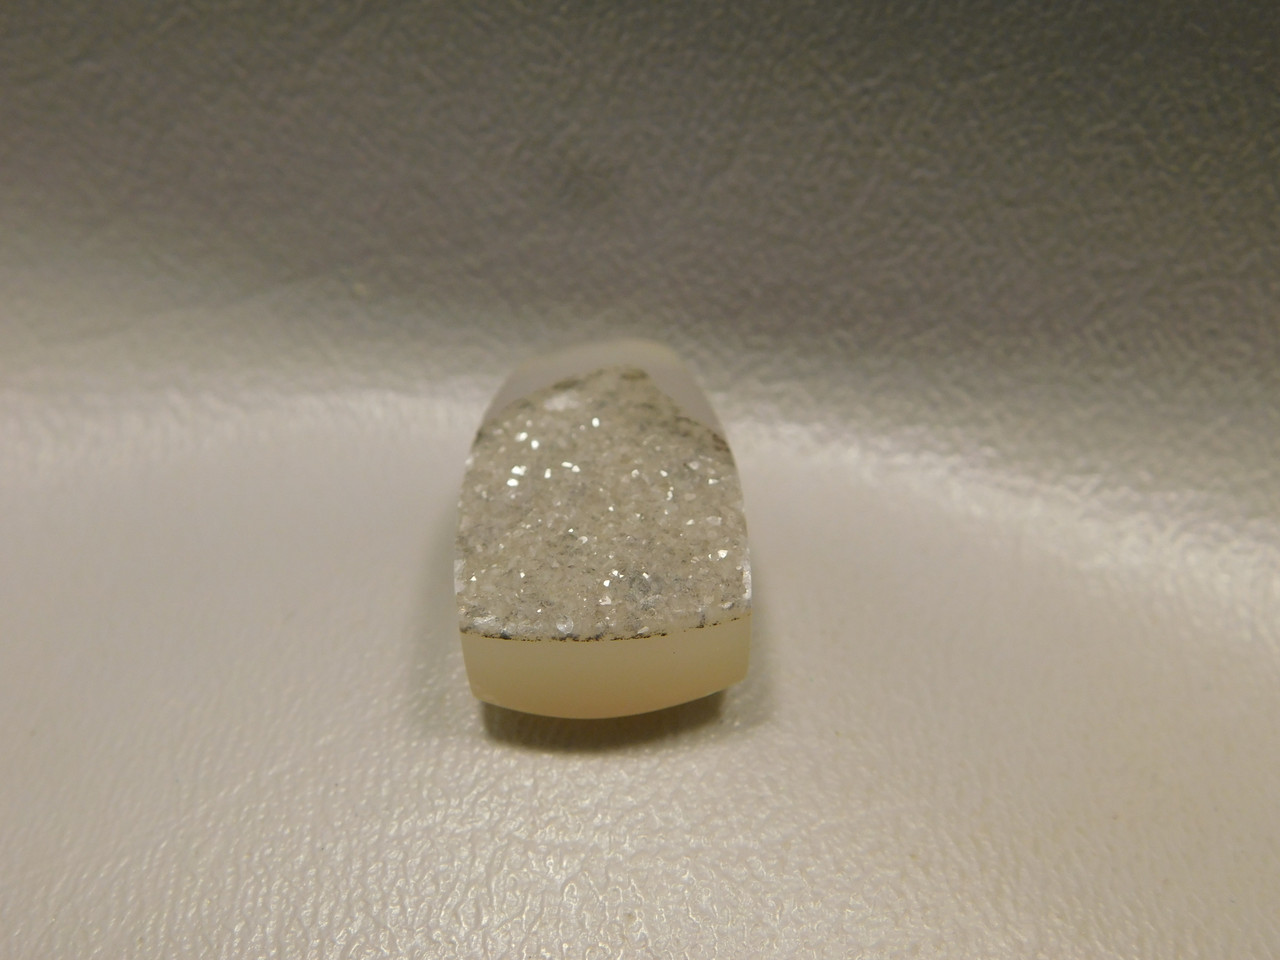 Druse Drusy Brazilian Agate Drilled Stone Bead Pendant #9